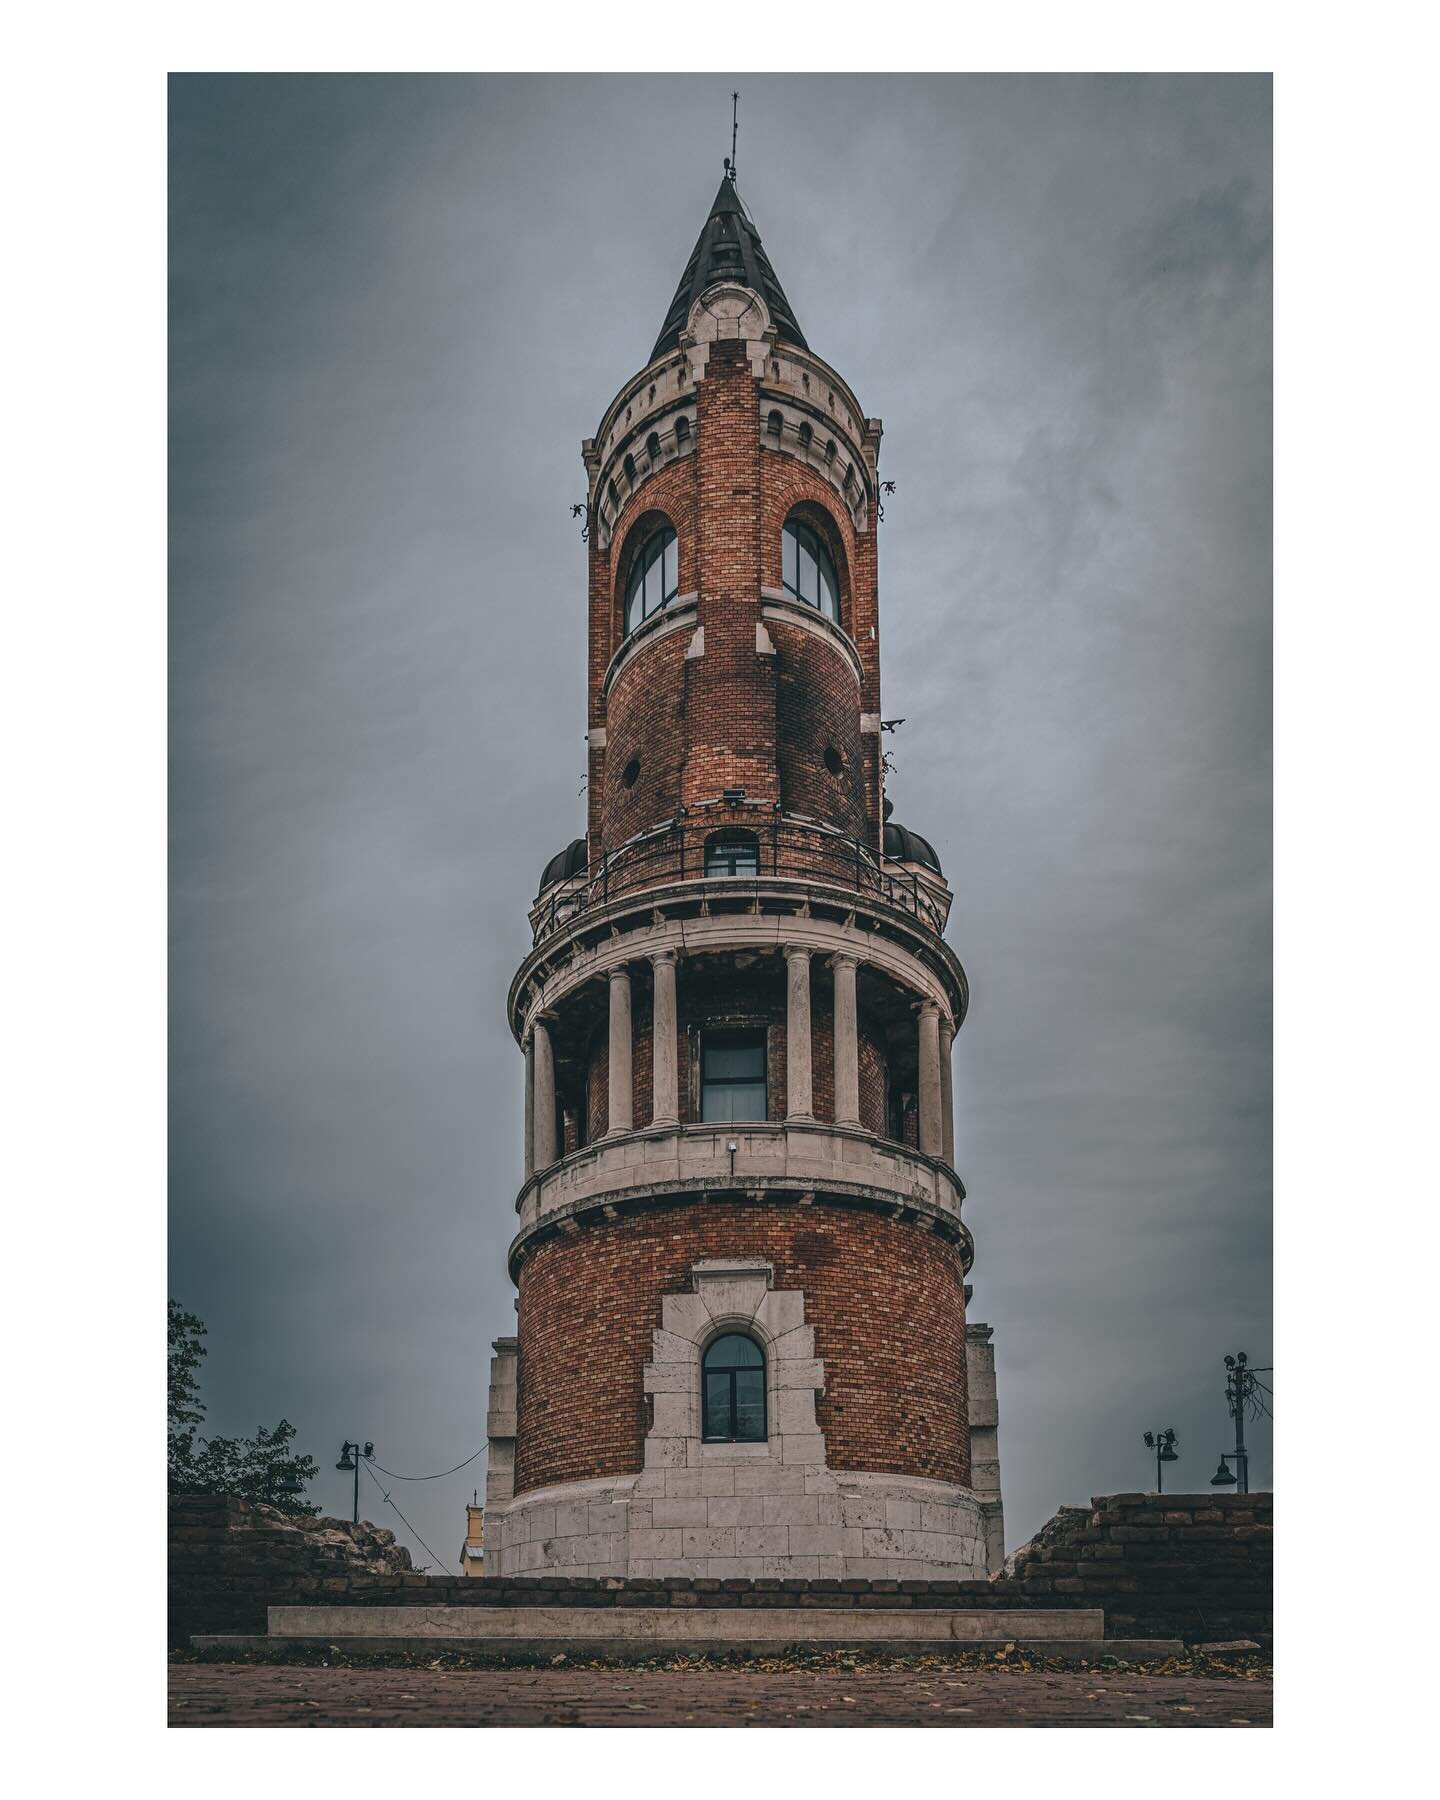 Gardos Tower, Zemun,Serbia
.
.
.
.
.
#nikongreece #nikoneurope #nikondach #gardostower 

#nikonphotography #nikonz #zcreators #nikonz5

#opticalwander 

#nature #natgeo 

#igtravel #igdaily #instagrammers #igers #instalove #instamood #instagood #phot